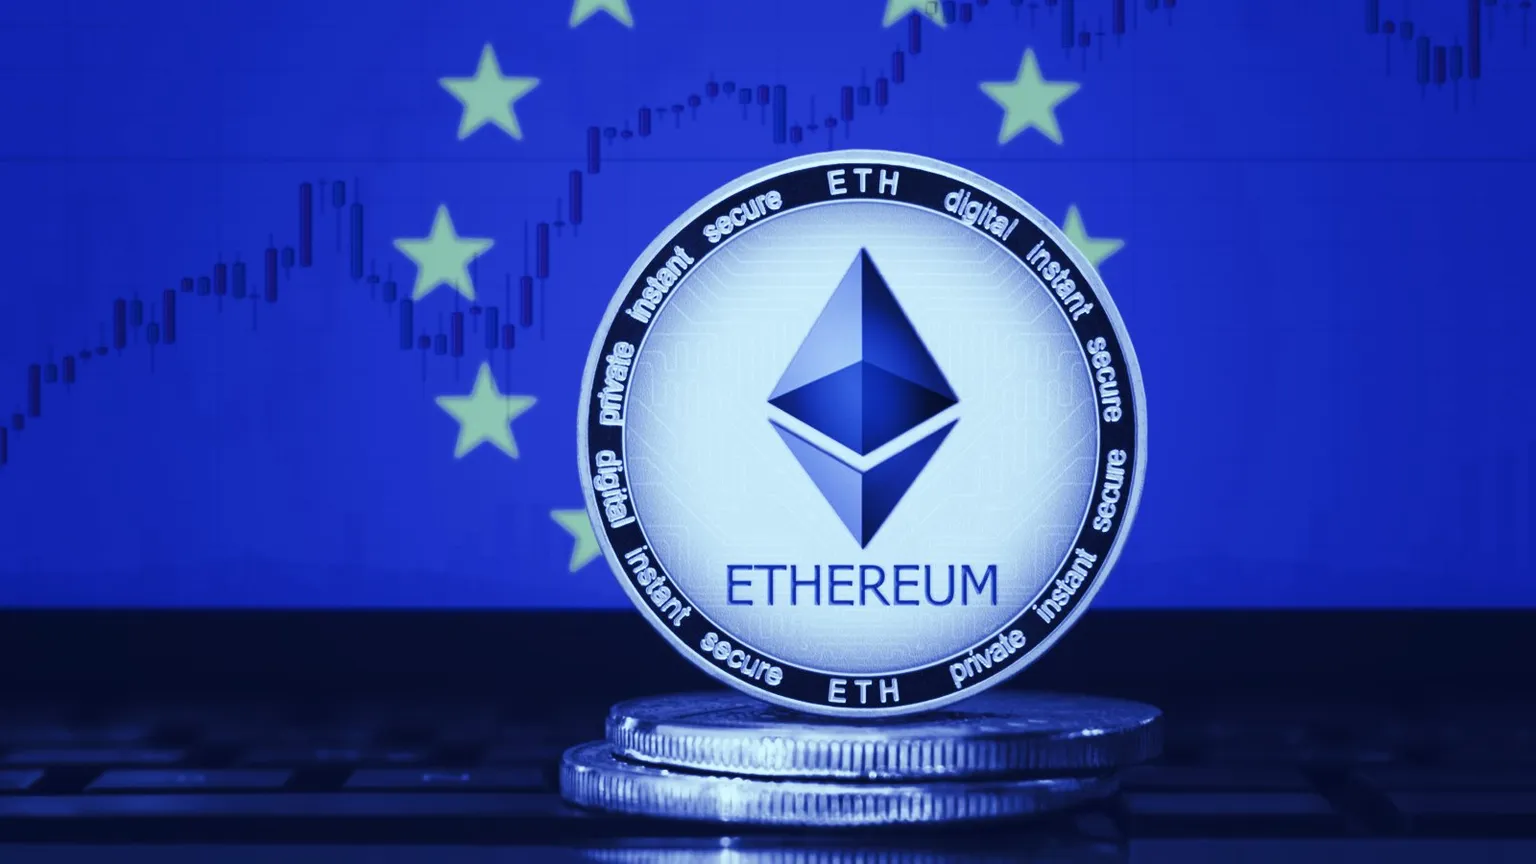 Ethereum domina la industria de la blockchain en Europa. (Imagen: Shutterstock)